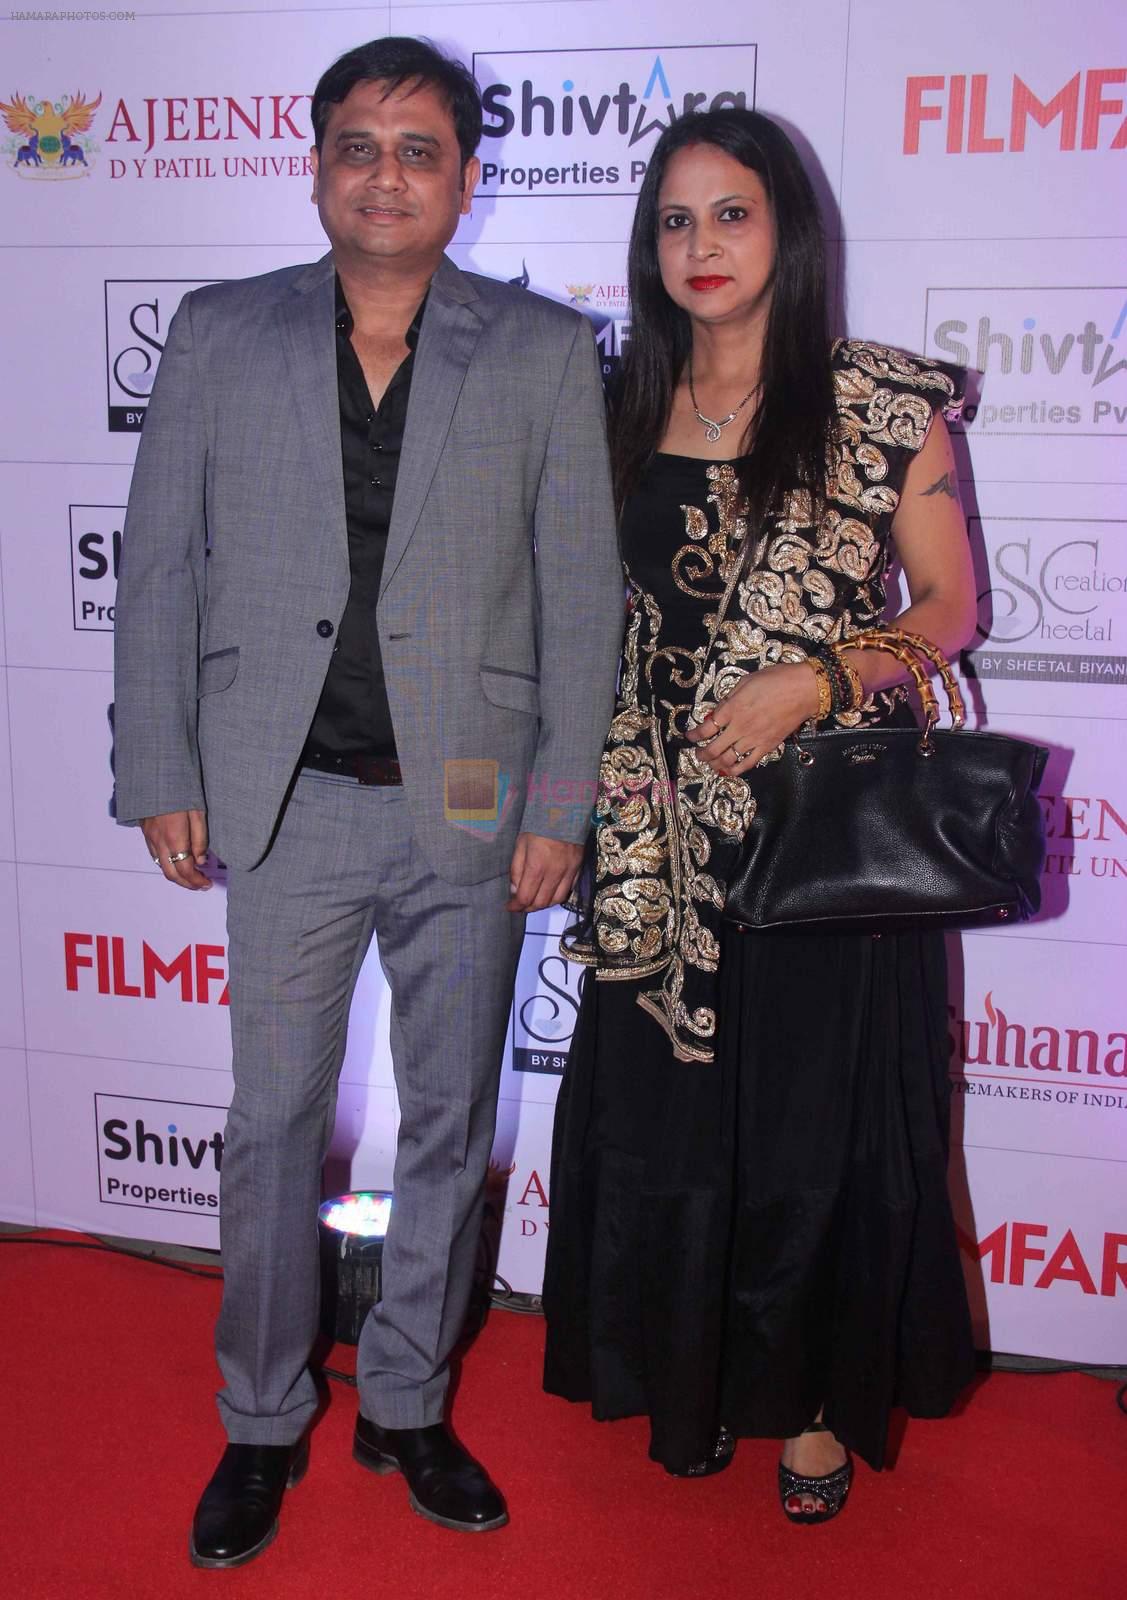 Meenakshi Singh with her husband at the Red Carpet of _Ajeenkya DY Patil University Filmfare Awards